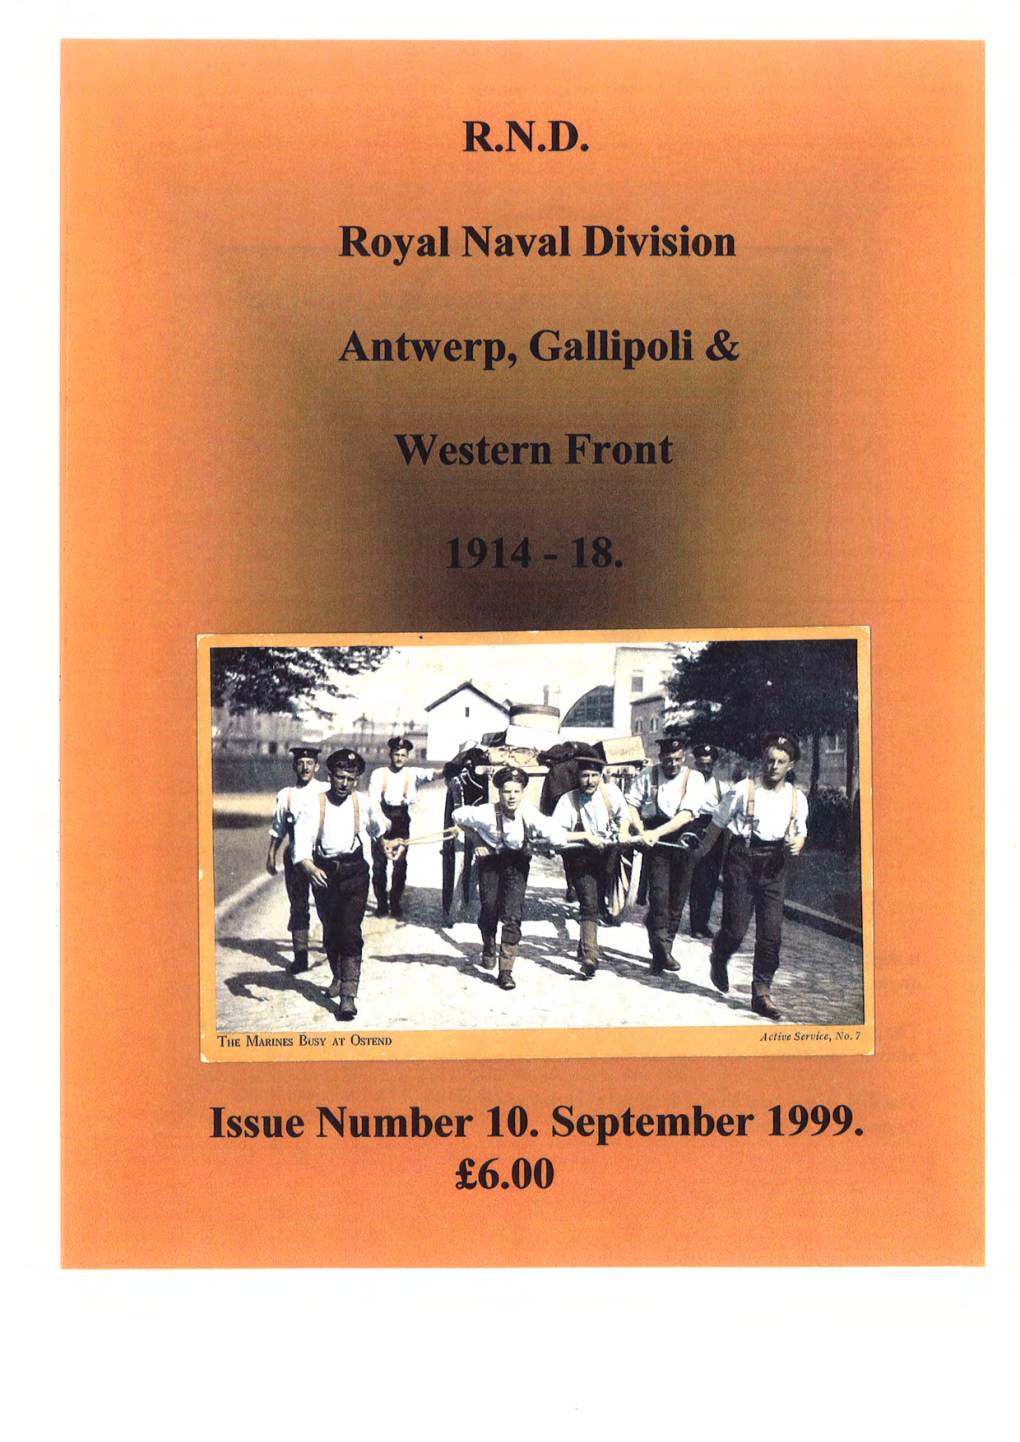 R.N.D. Royal Naval Division